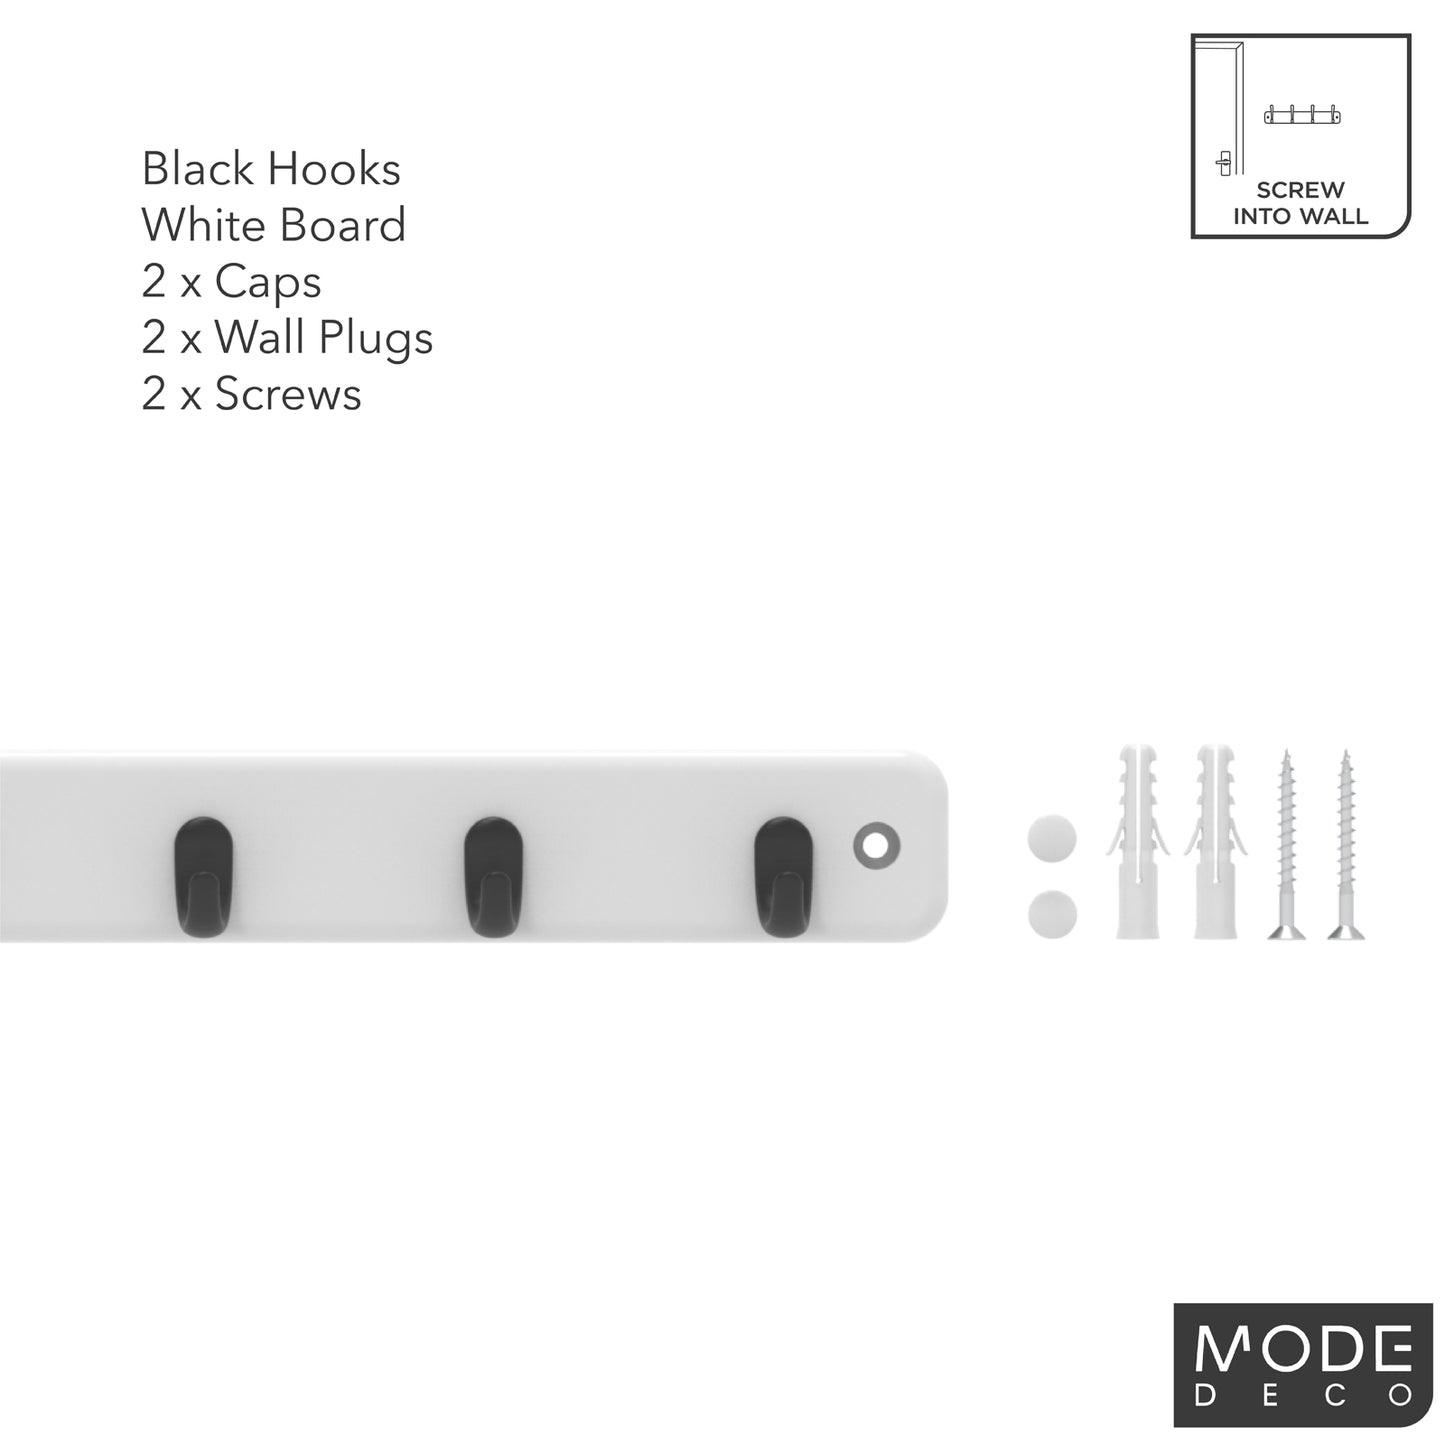 7 Black Hooks on White Board Key Rack